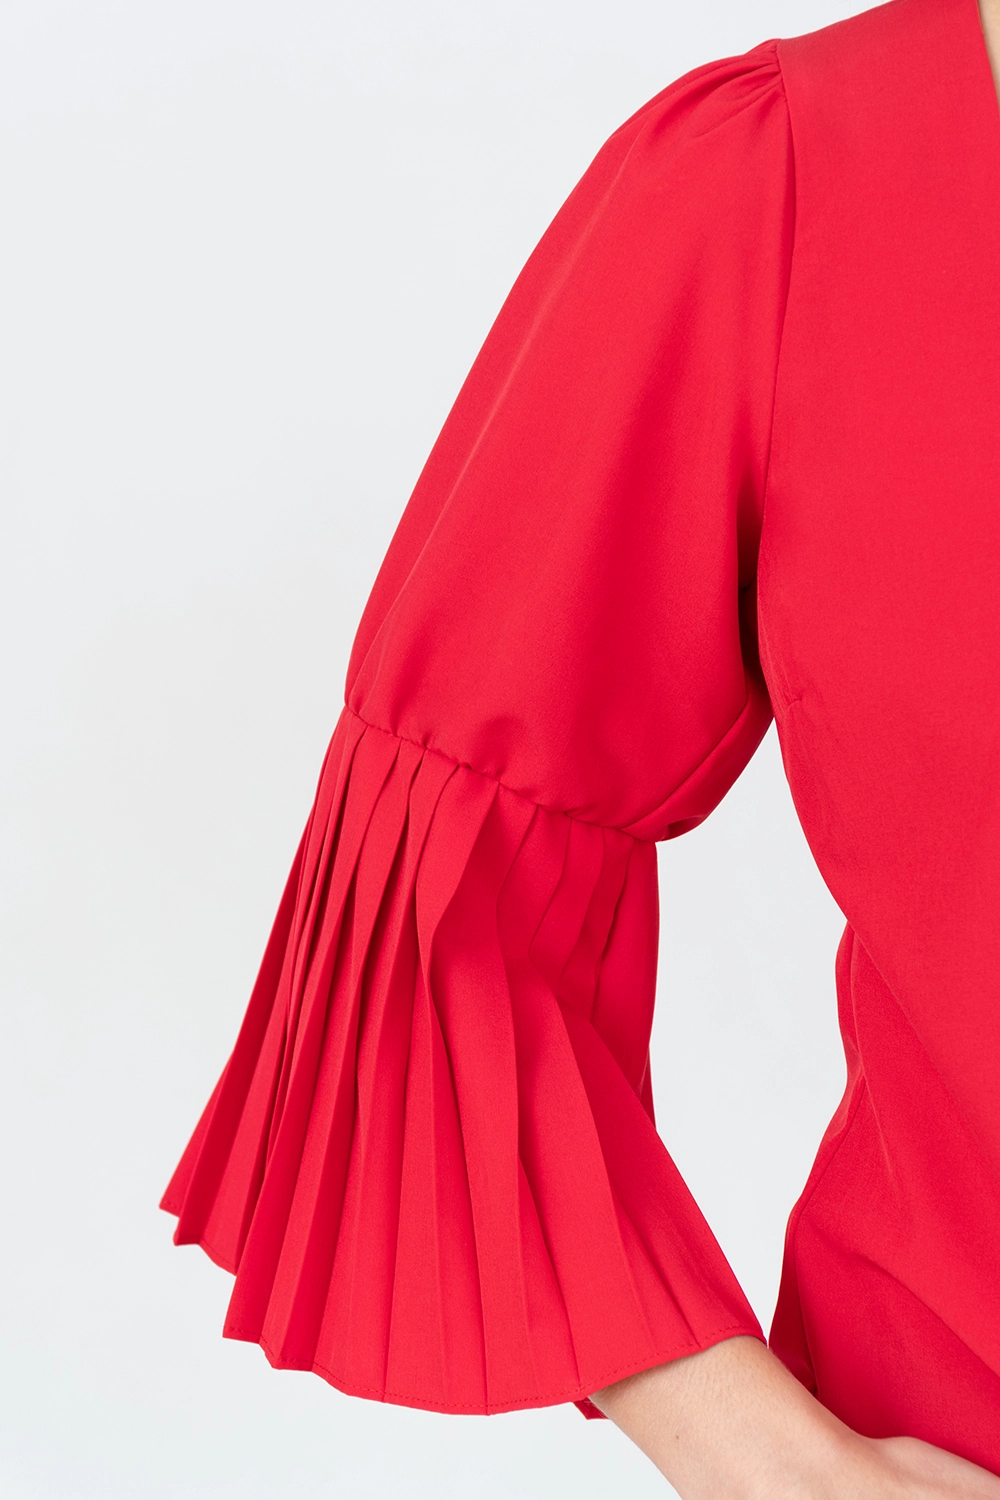 Blusa maga 3/4 plisada escote cuadrado. Rojo talla 14